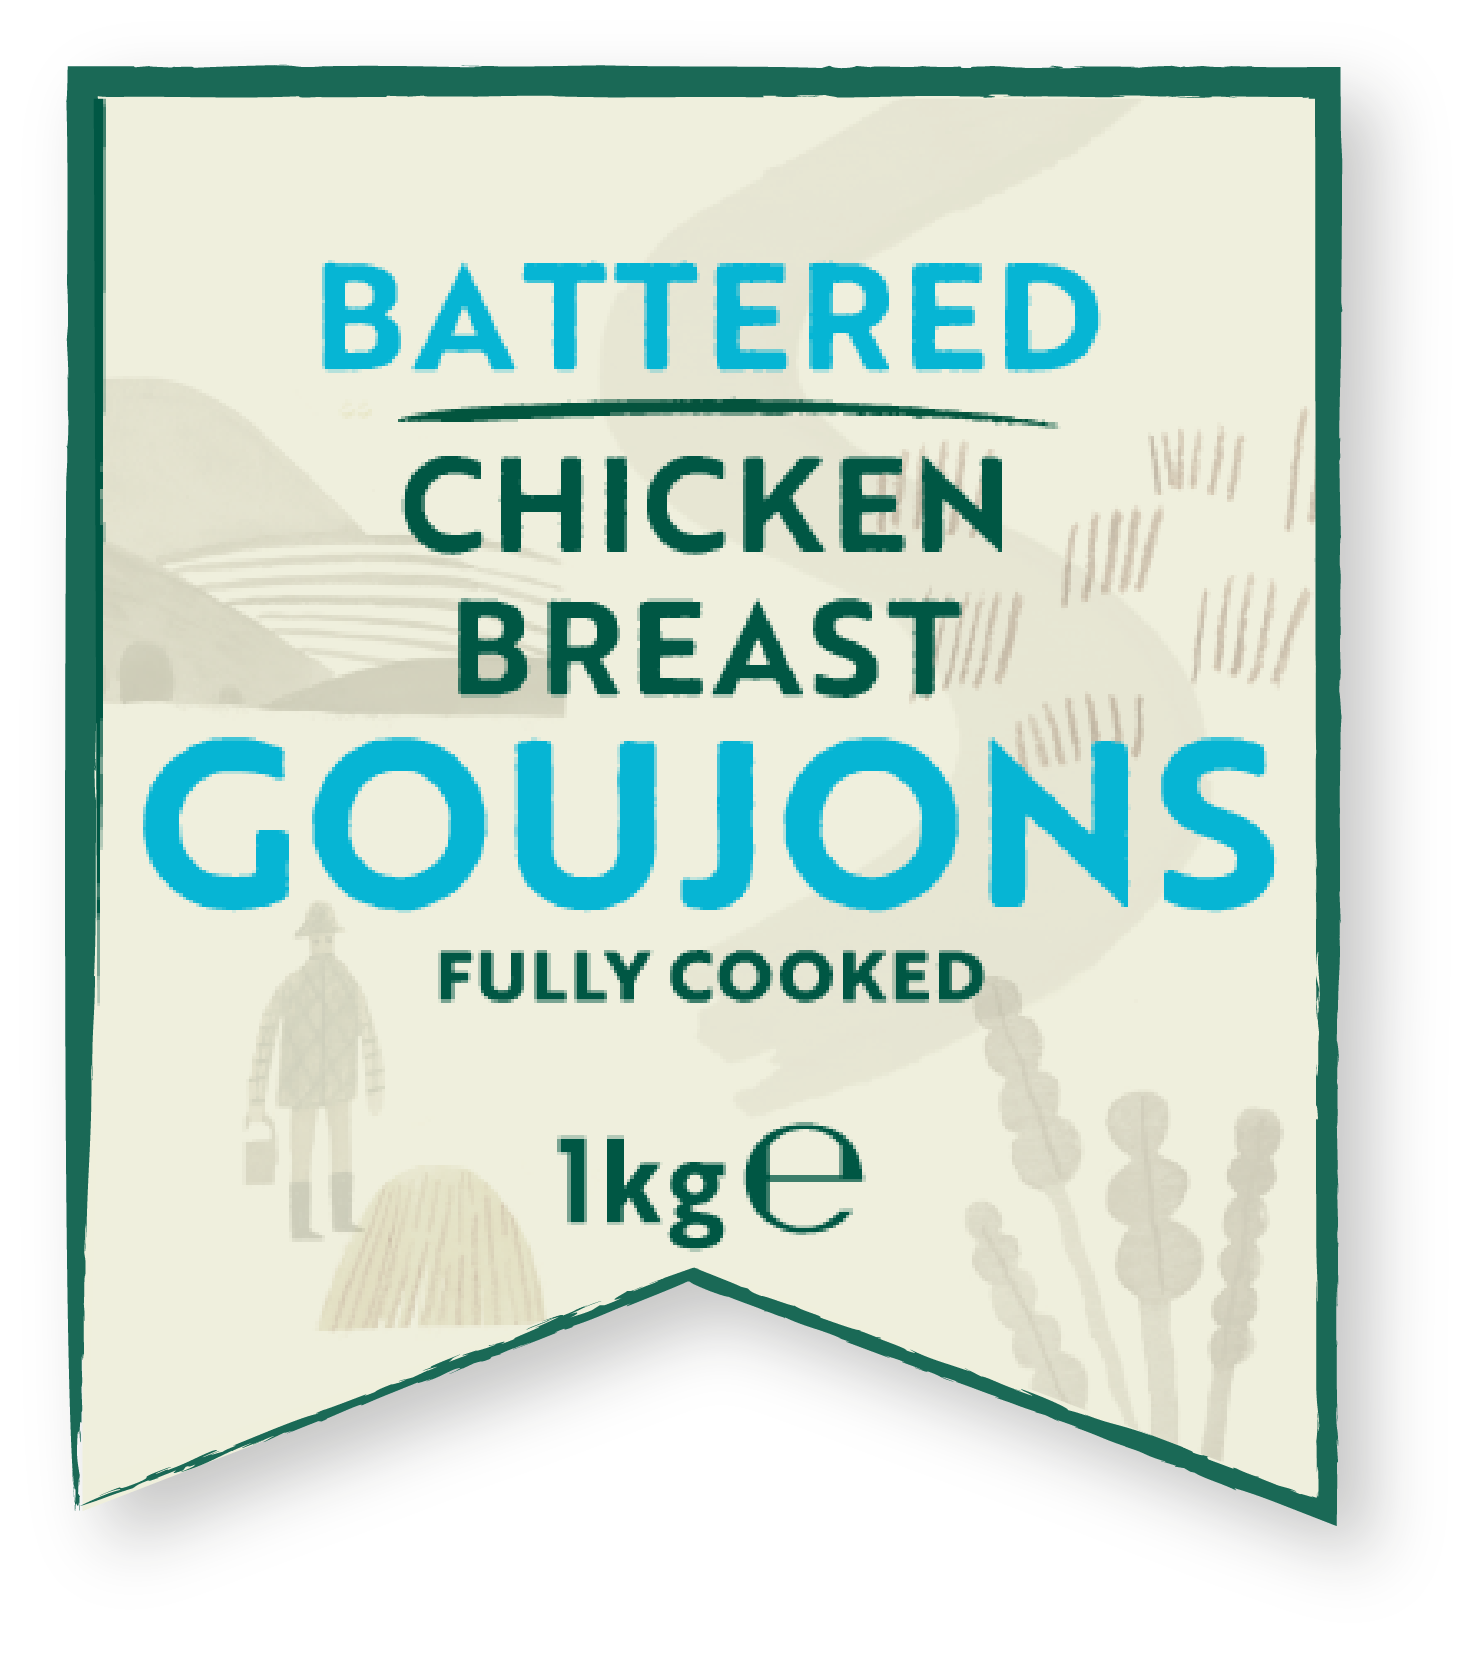 Battered chicken breast goujons